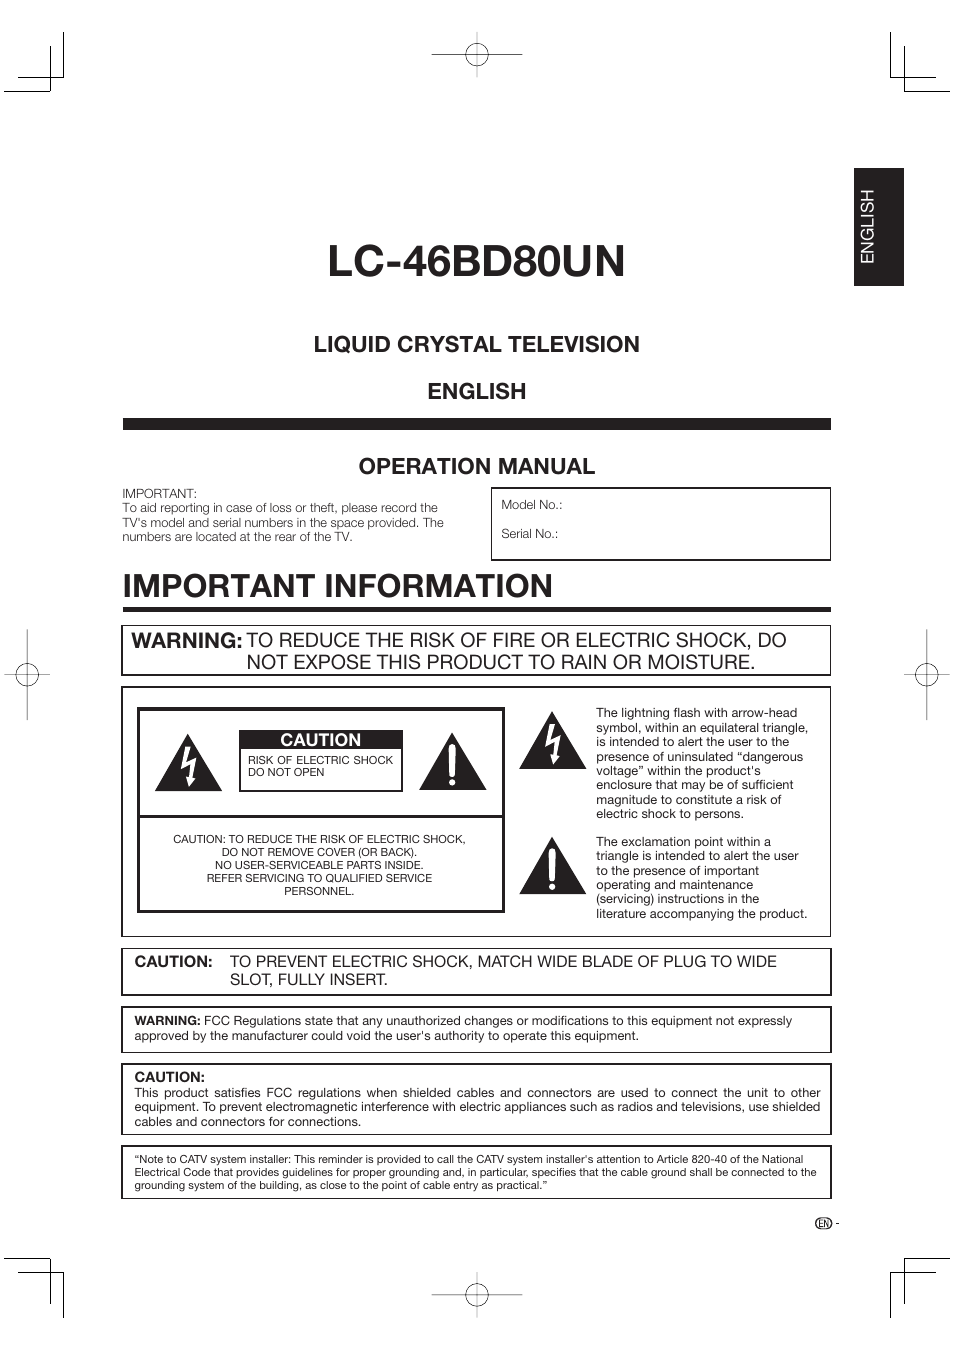 Important information, Lc-46bd80un, Operation manual | Liquid crystal television english, Warning | Sharp Aquos LC 46BD80UN User Manual | Page 3 / 65